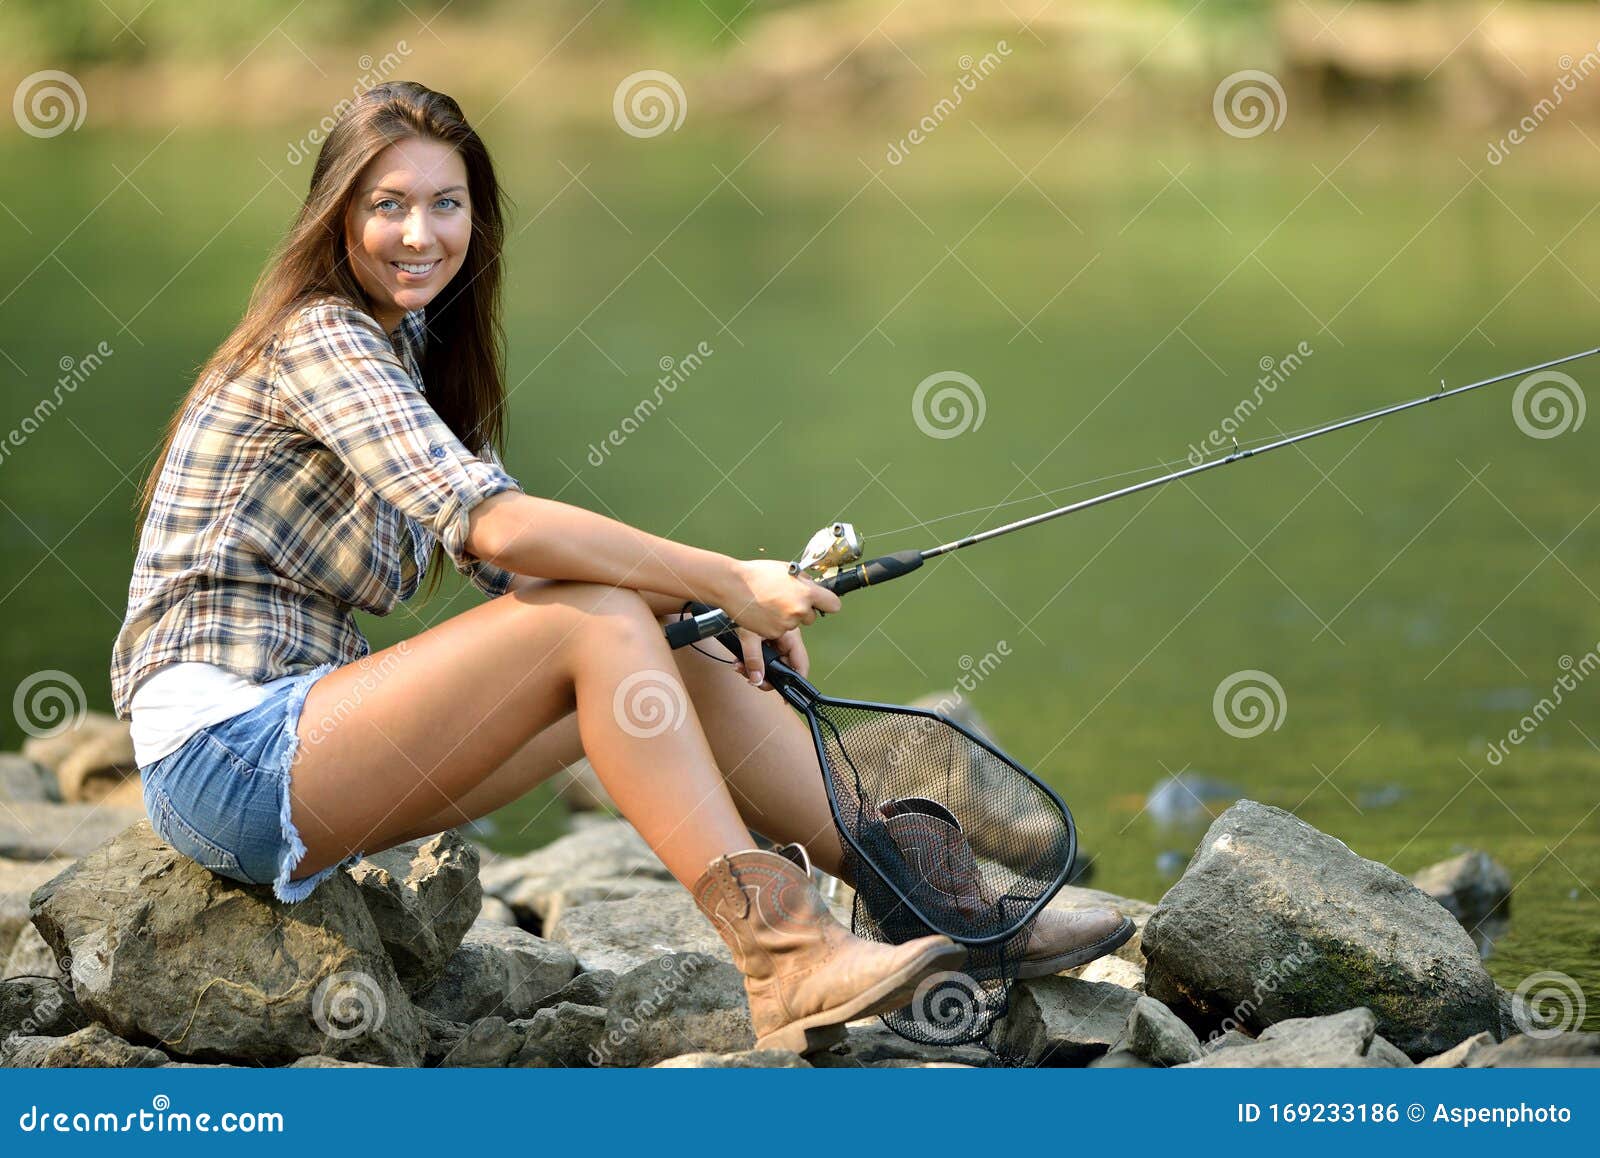 349 Sexy Woman Fishing Stock Photos